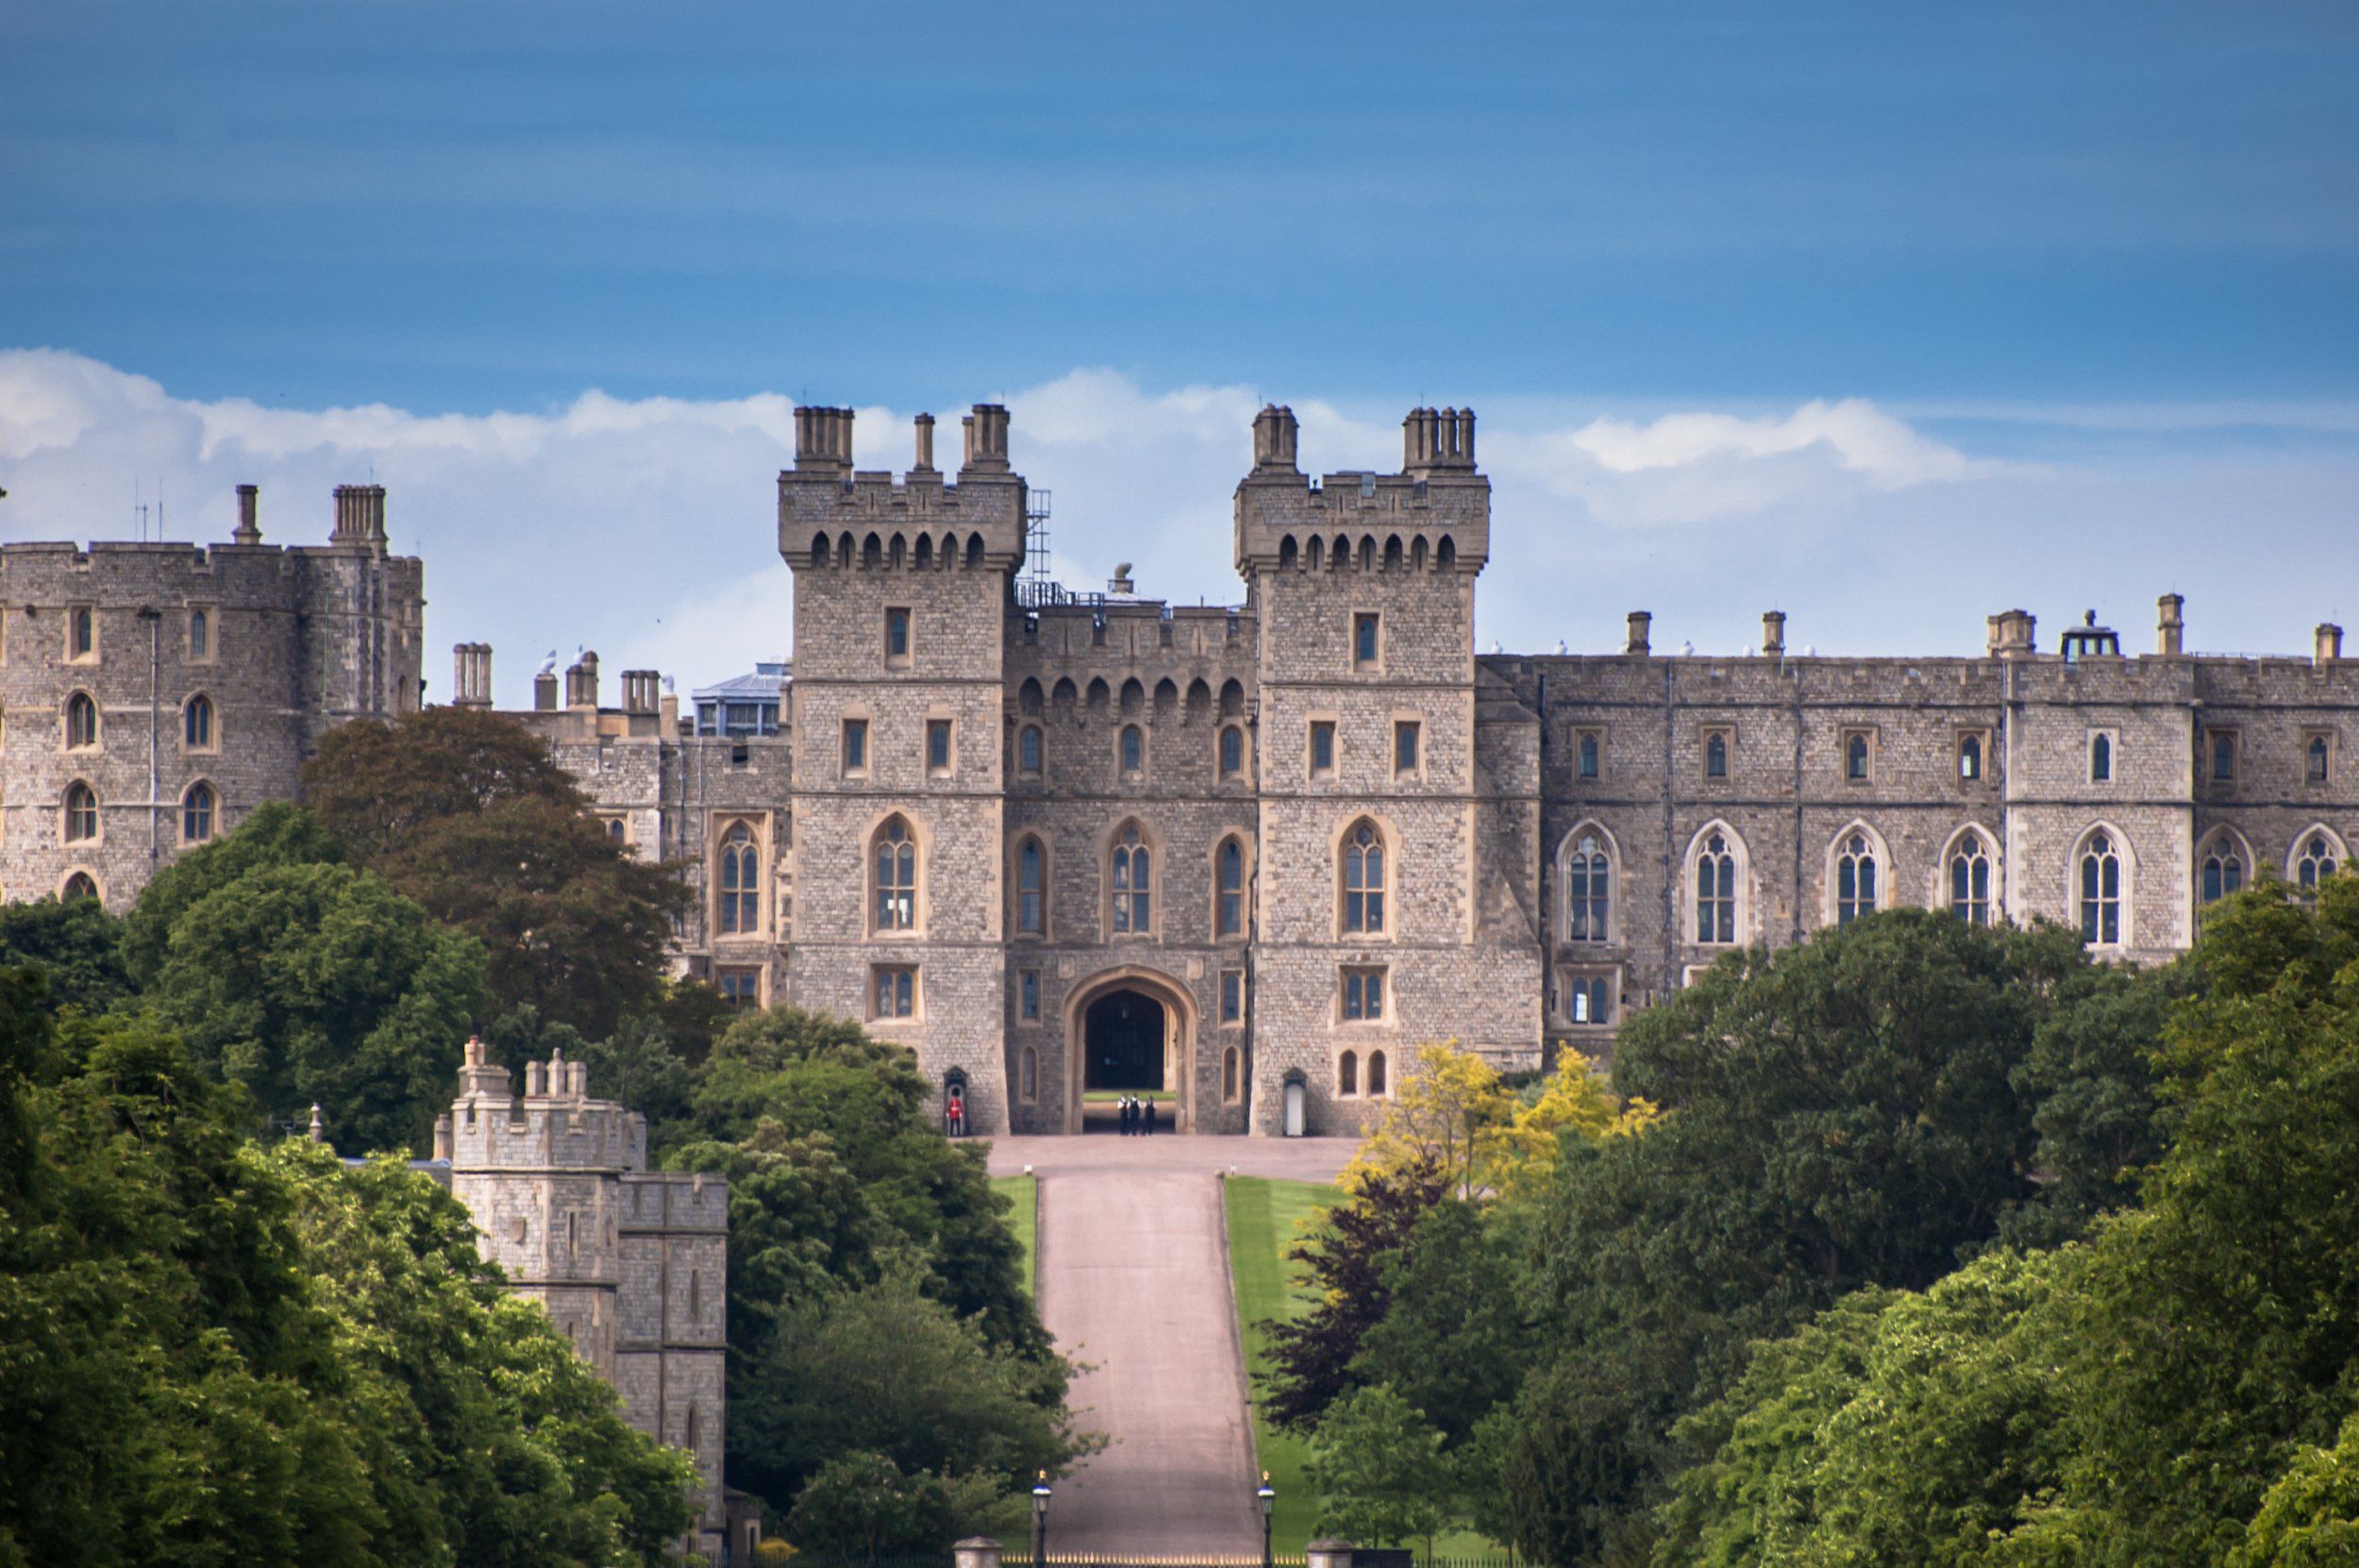 Windsor Castle Orangery Doors cots taxpayer £1.2 million, show royal ...